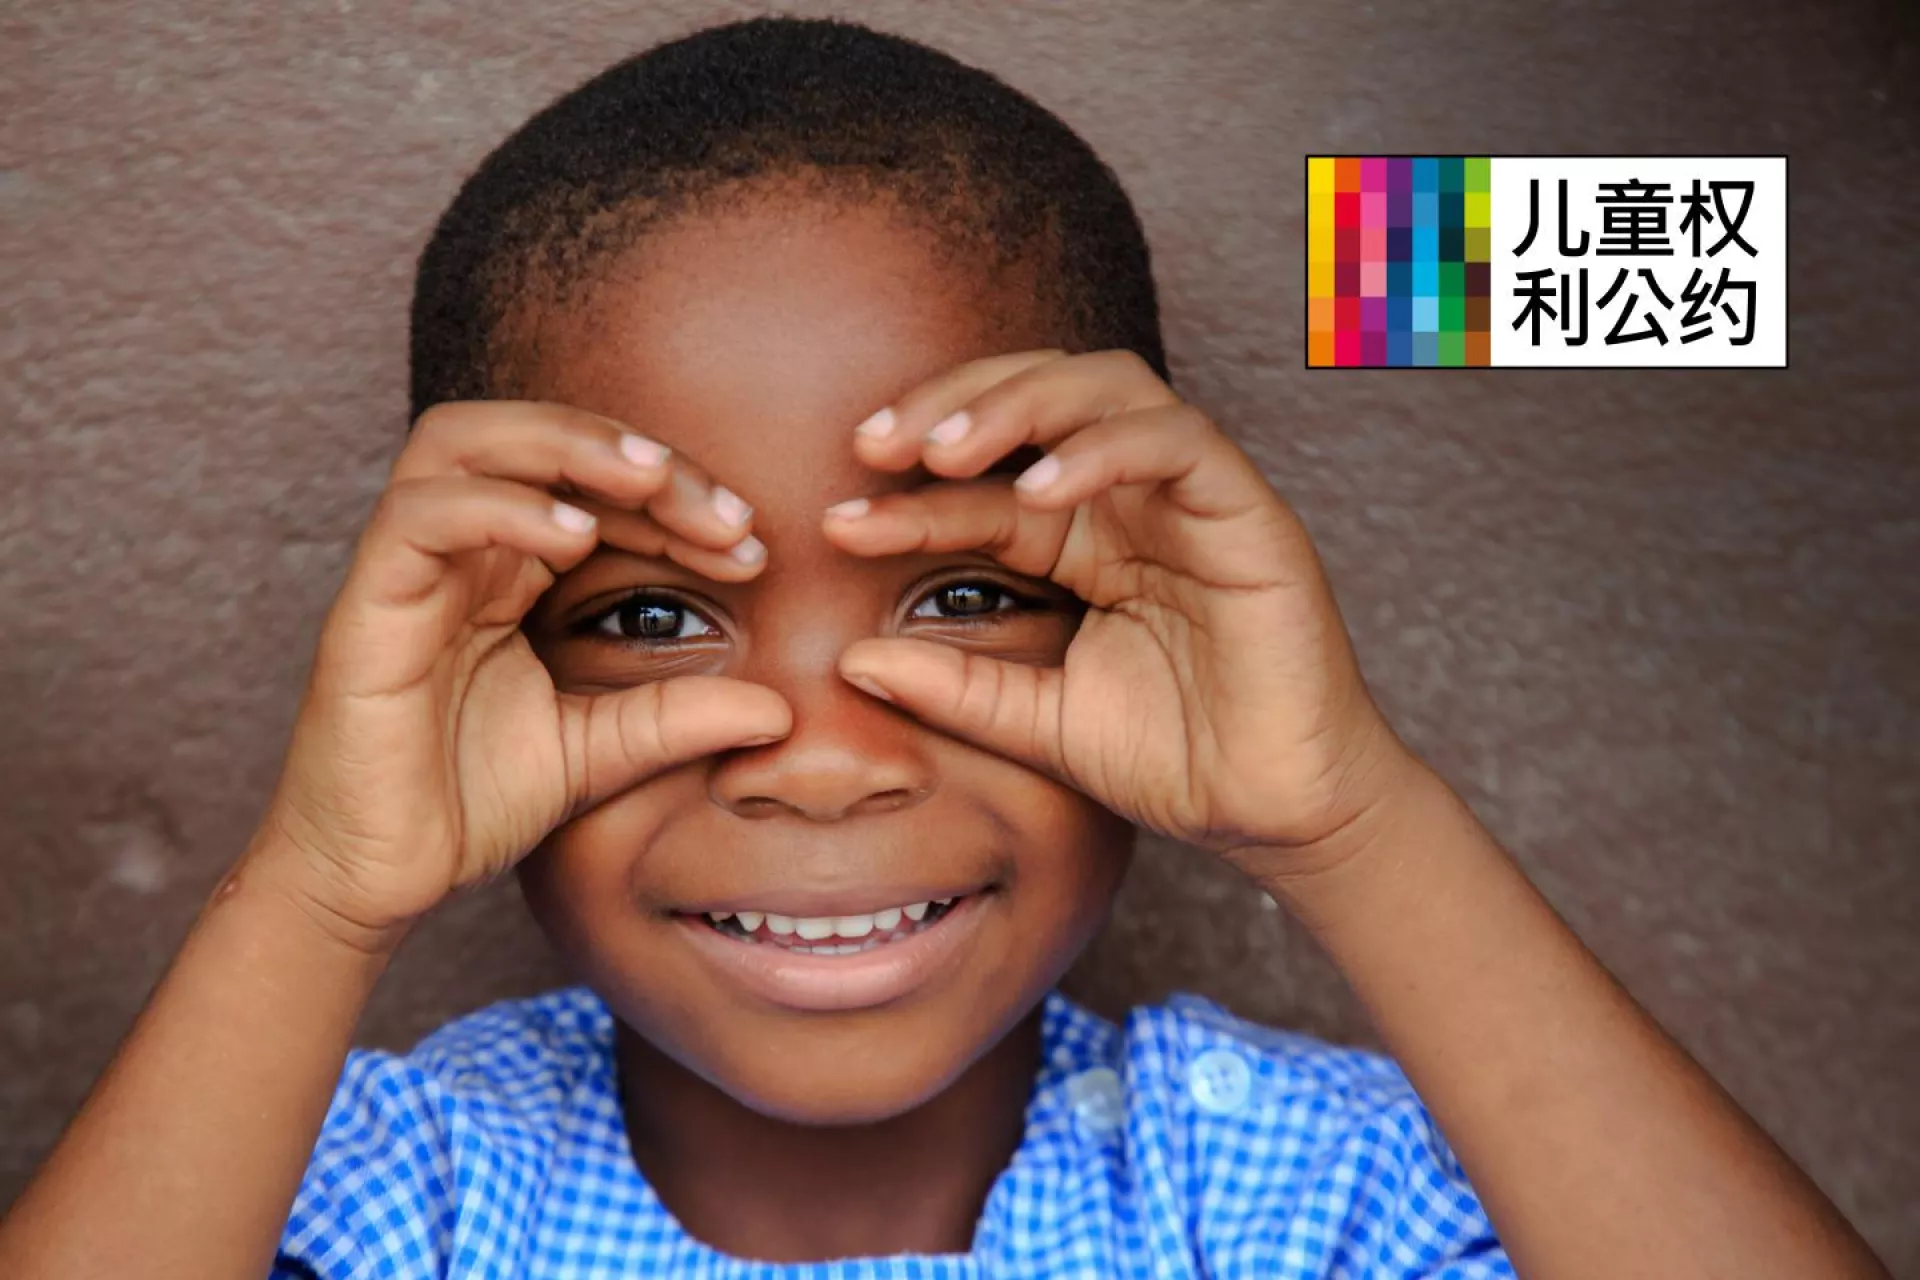 Happy child smiling in Gonzagueville, in Abidjan, Côte d'Ivoire.